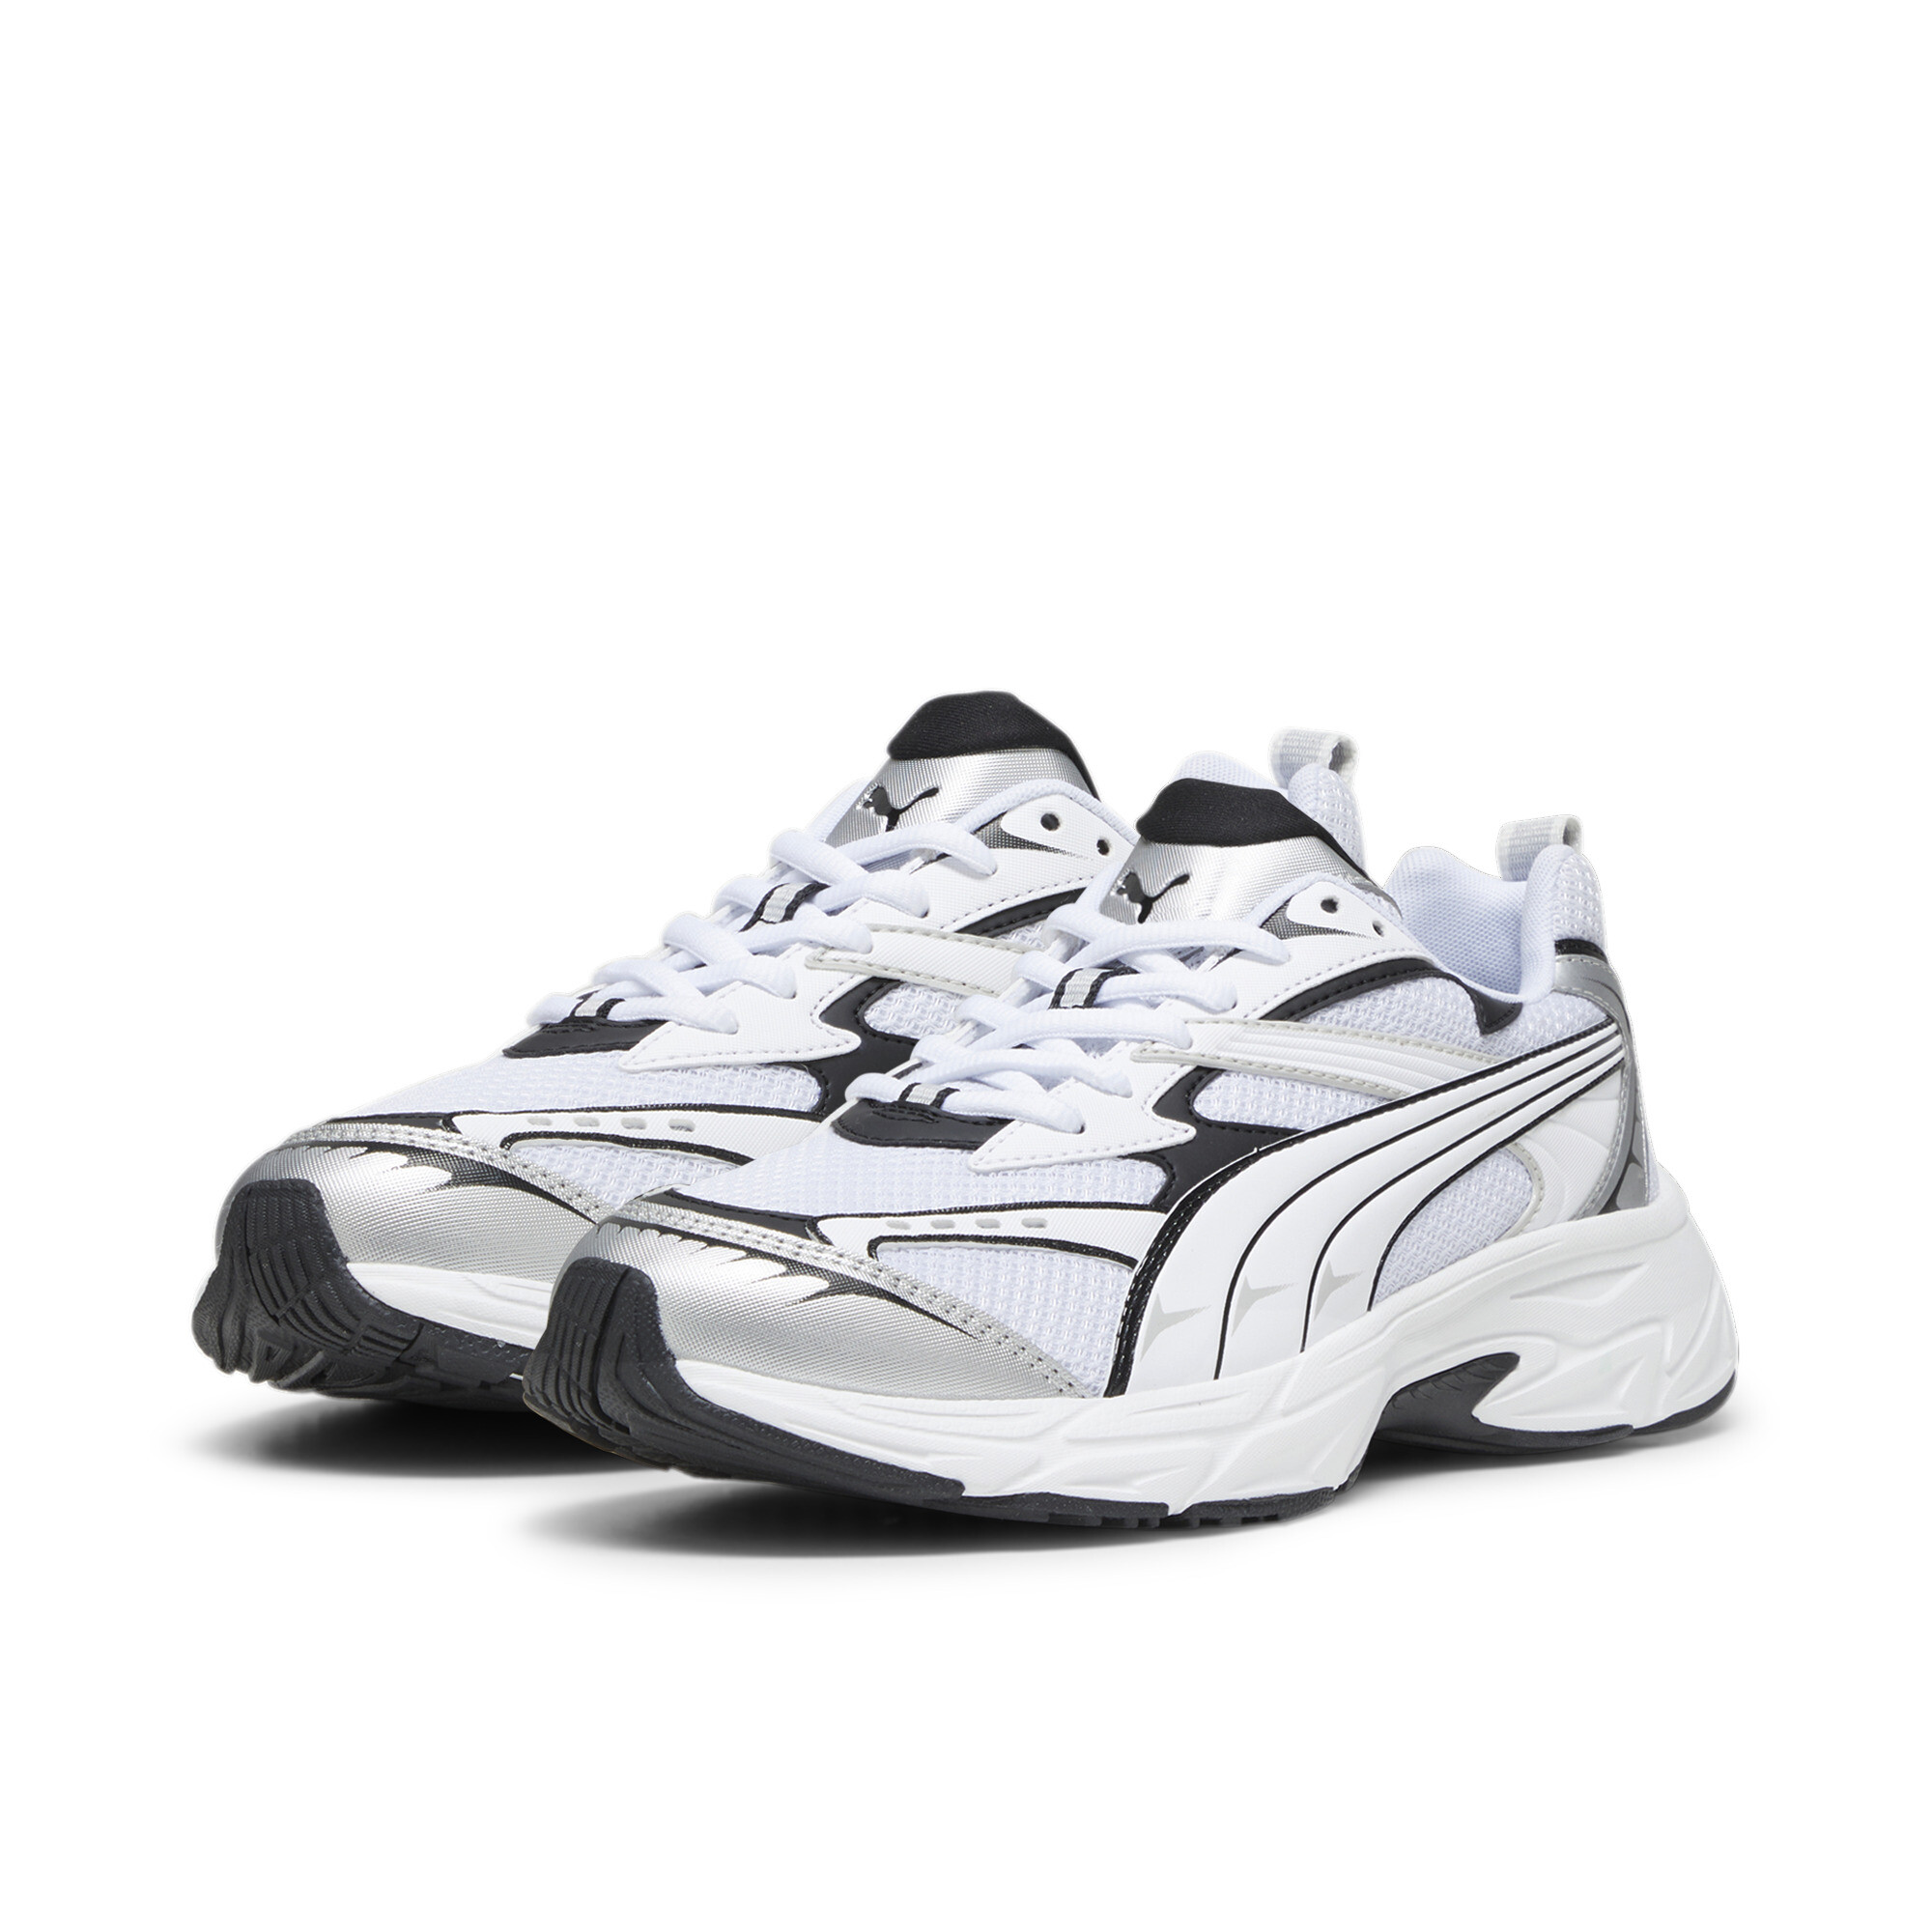 Men's PUMA Morphic Base Sneakers In Gray, Size EU 40